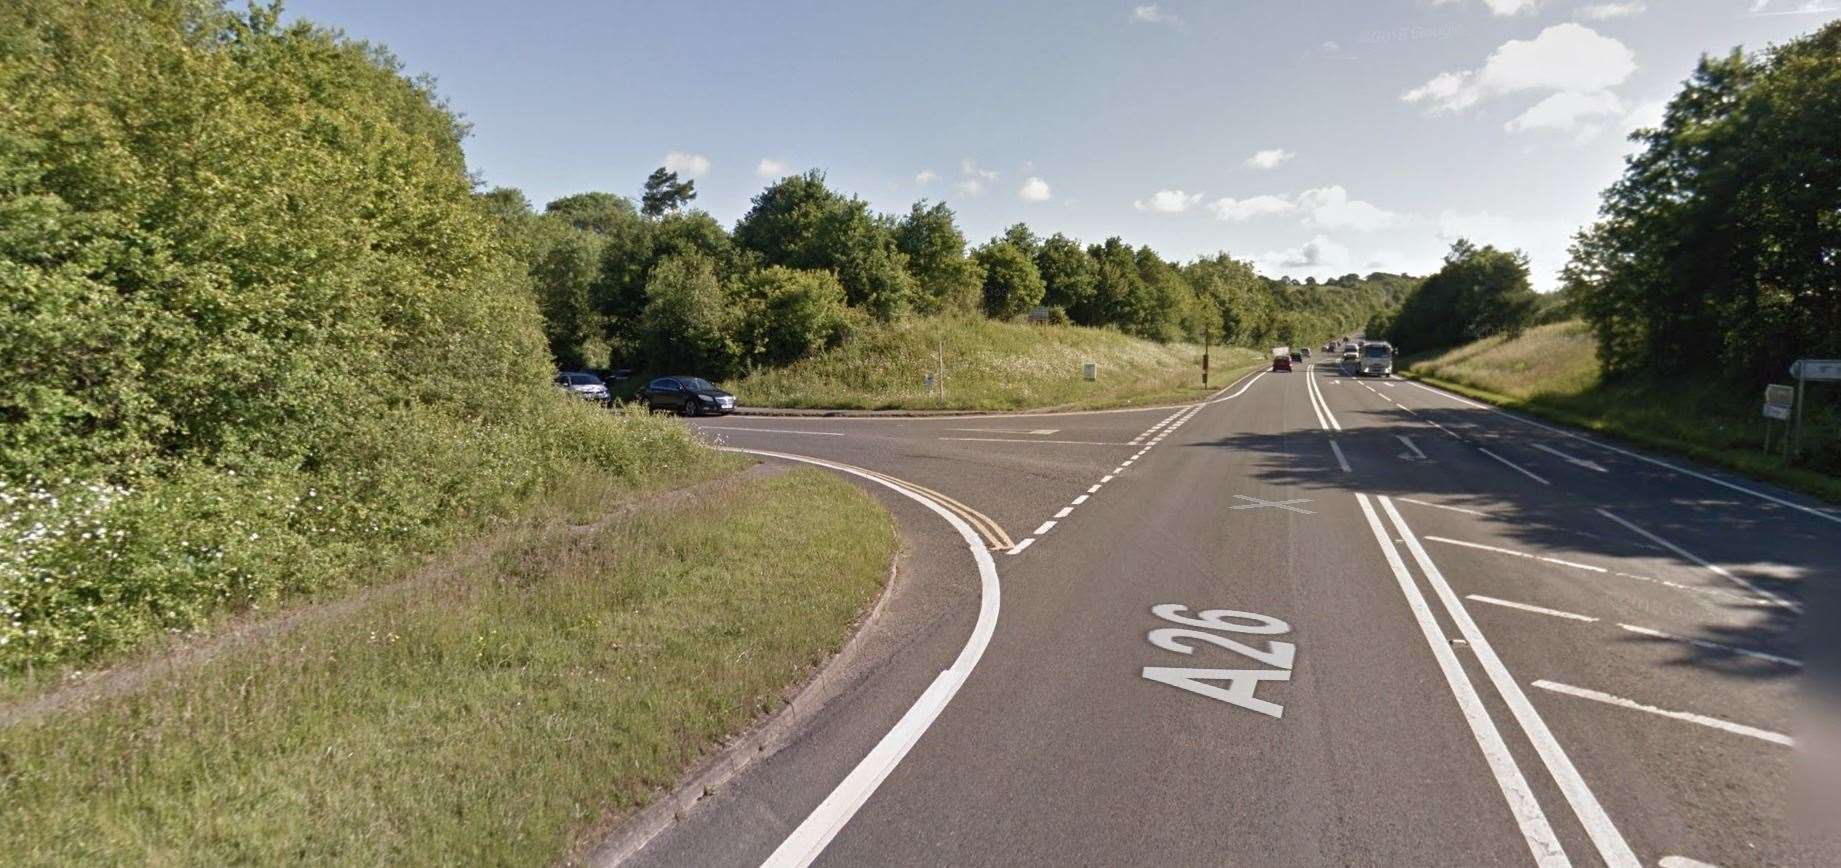 The accident happened on the A26 Eridge Road near Groombridge Lane. Picture: Google Street View